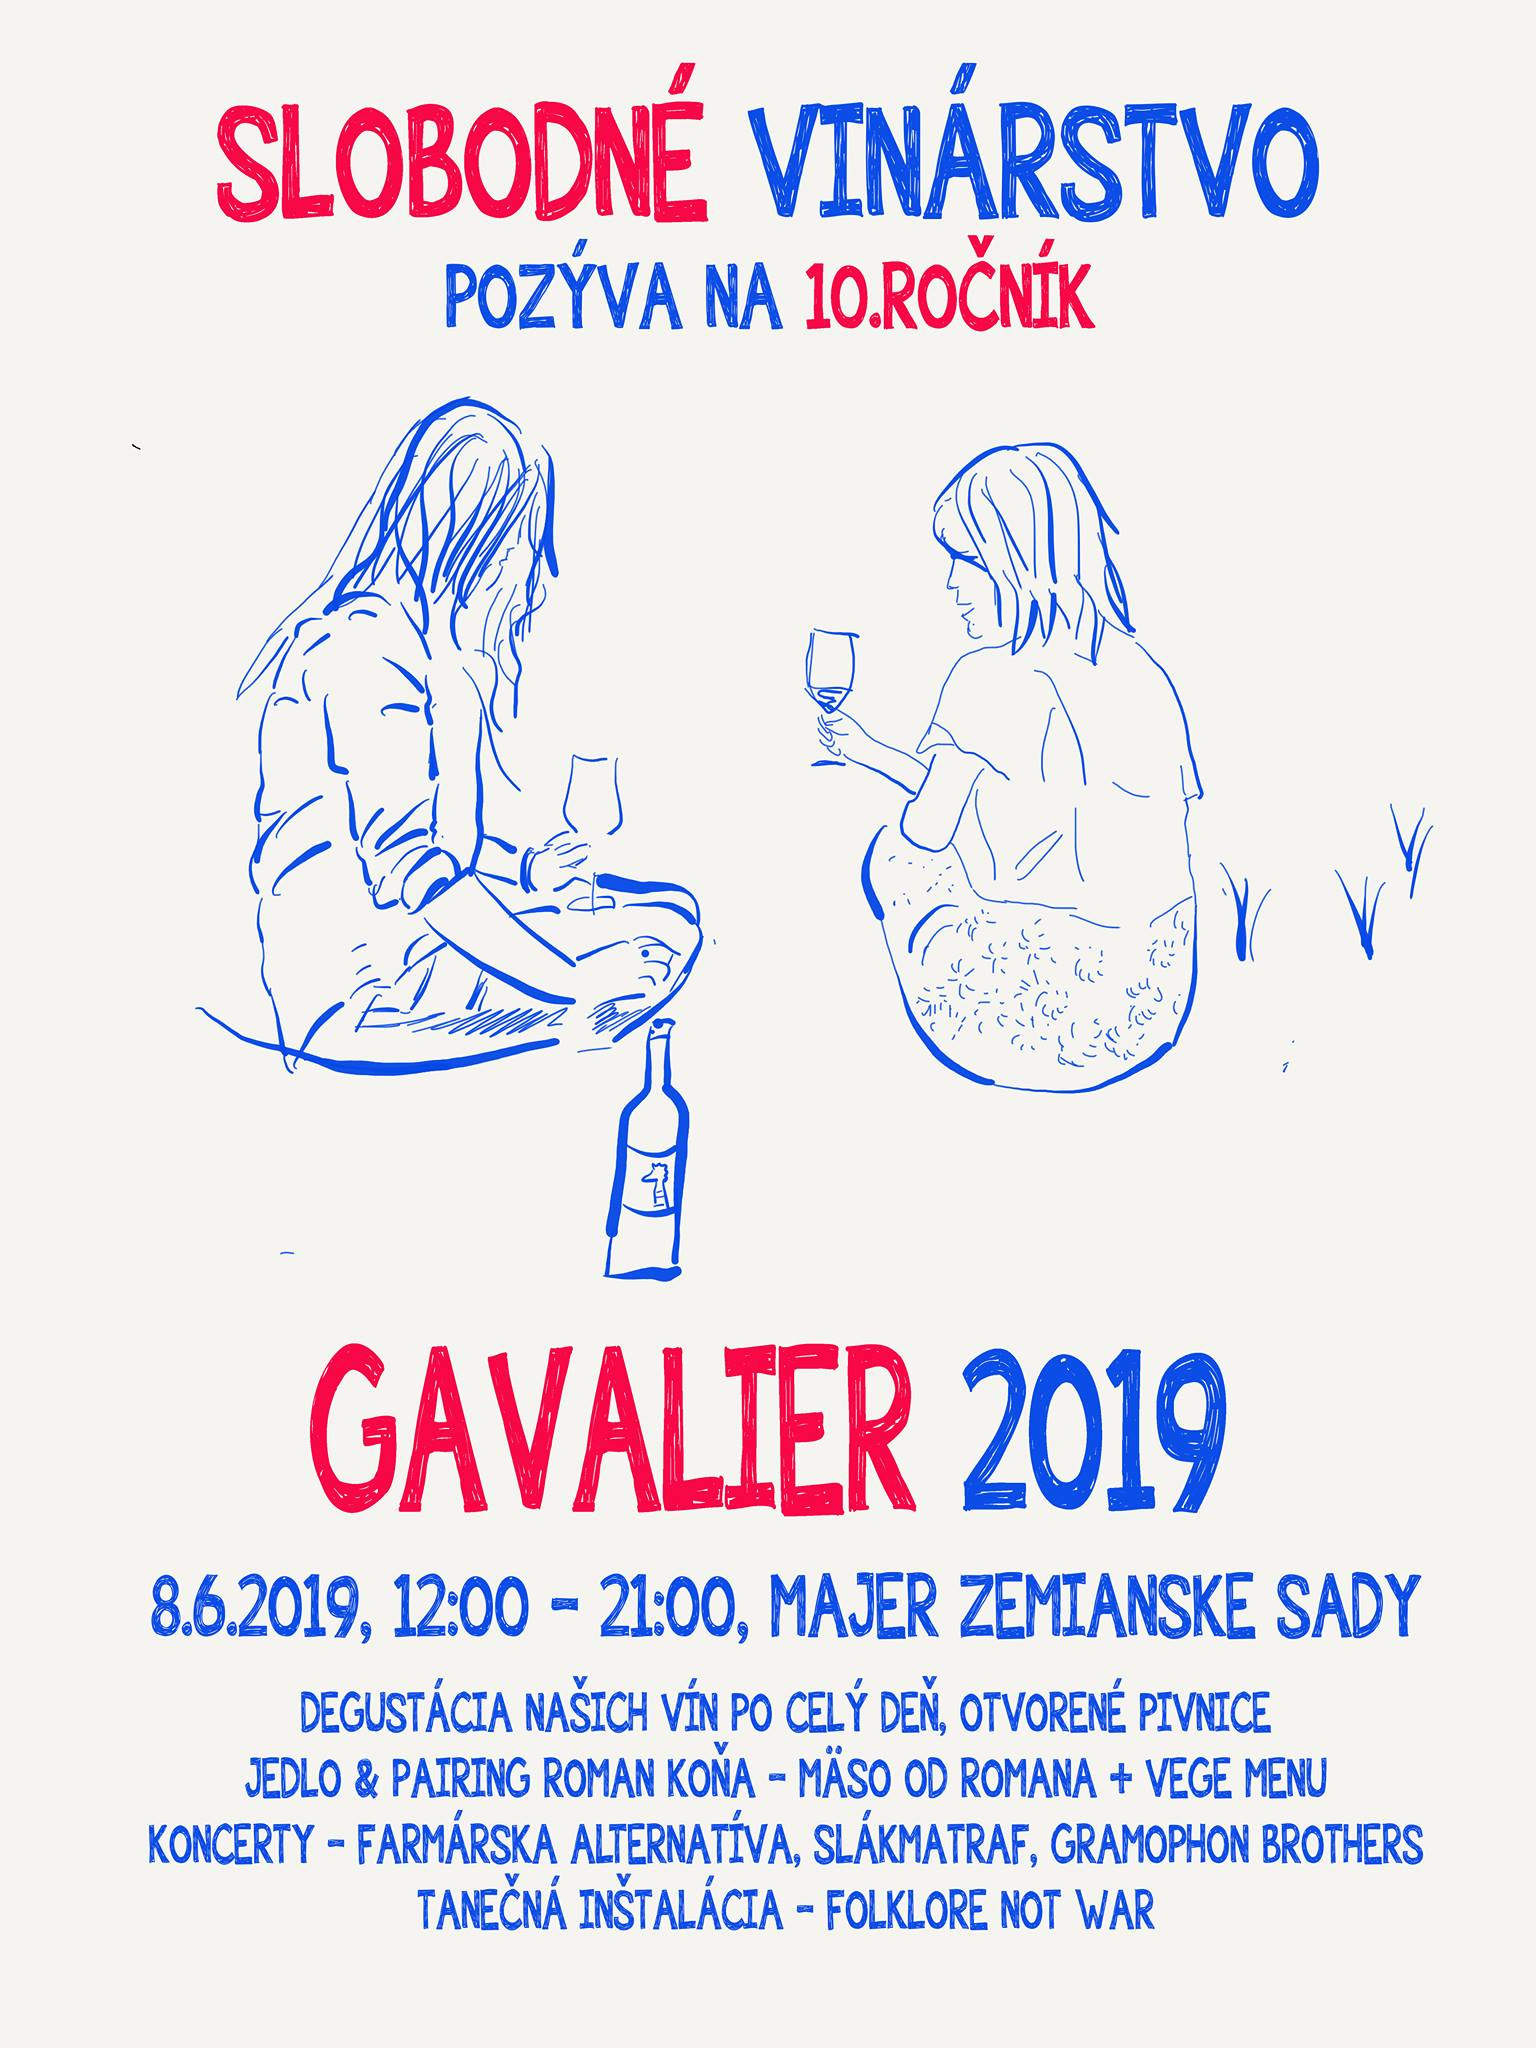 Gavalier 2019 v Slobodnom vinárstve (8.6.2019)